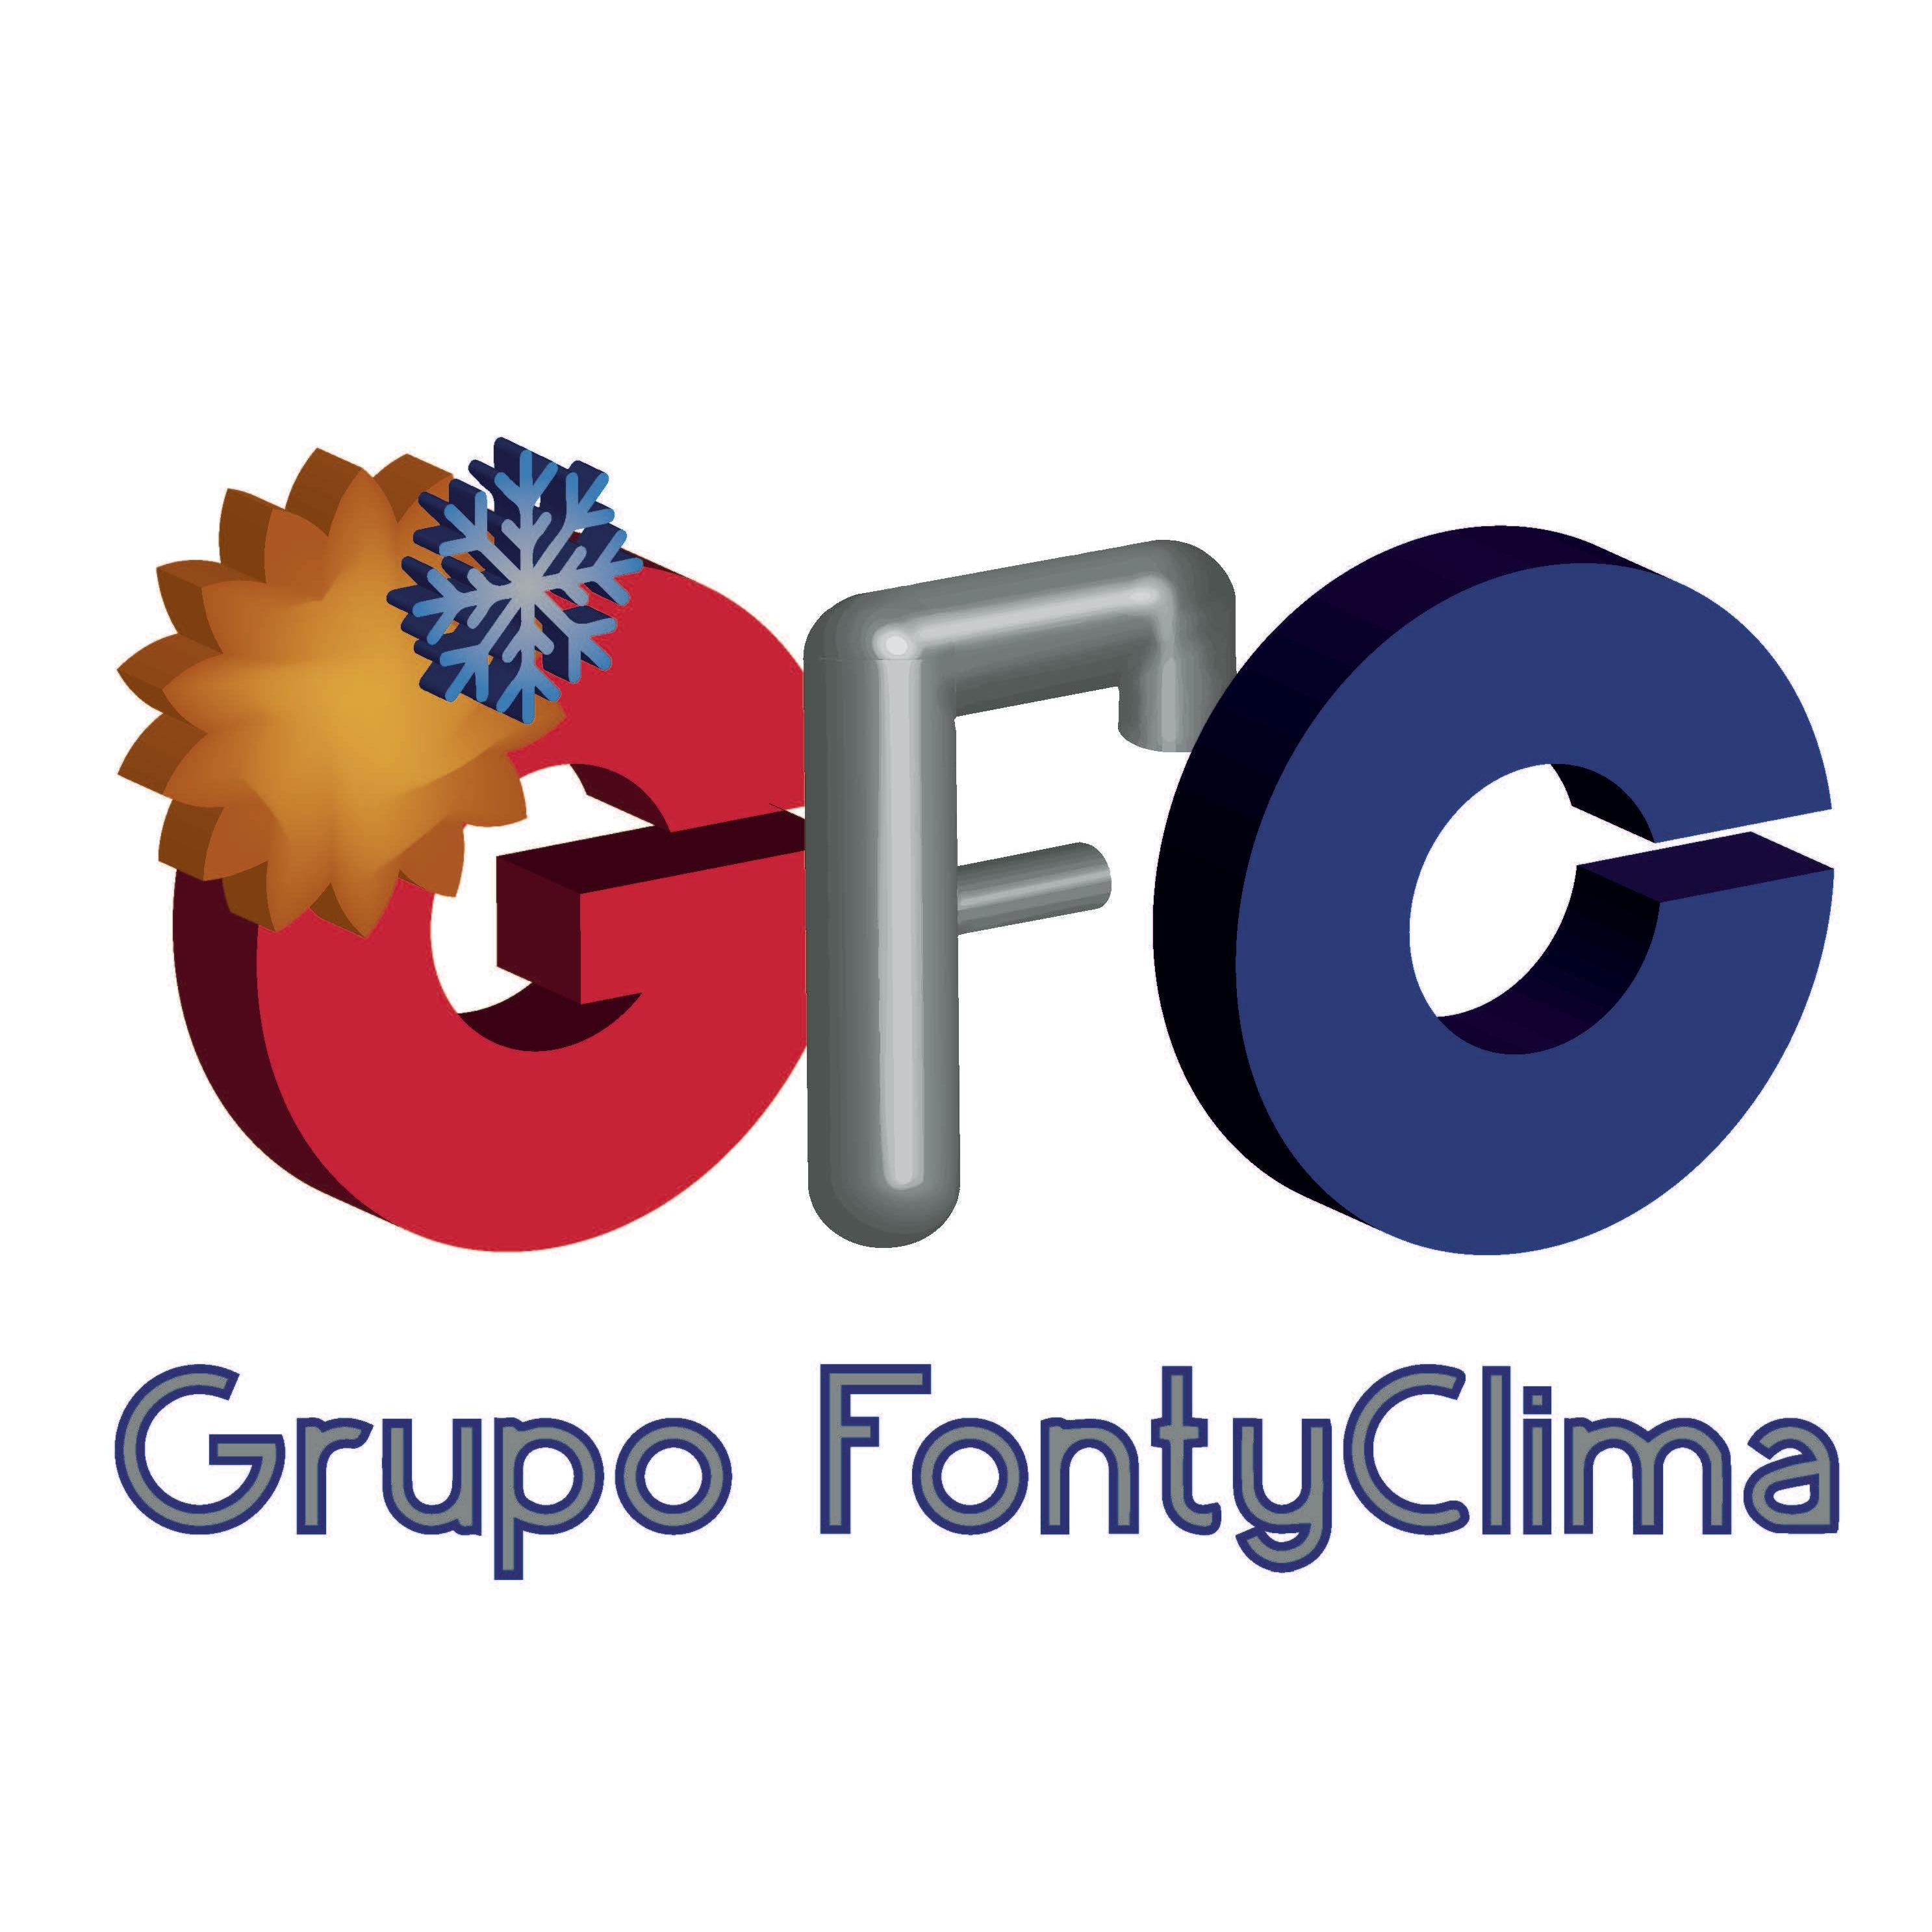 Grupo Fontyclima Valladolid